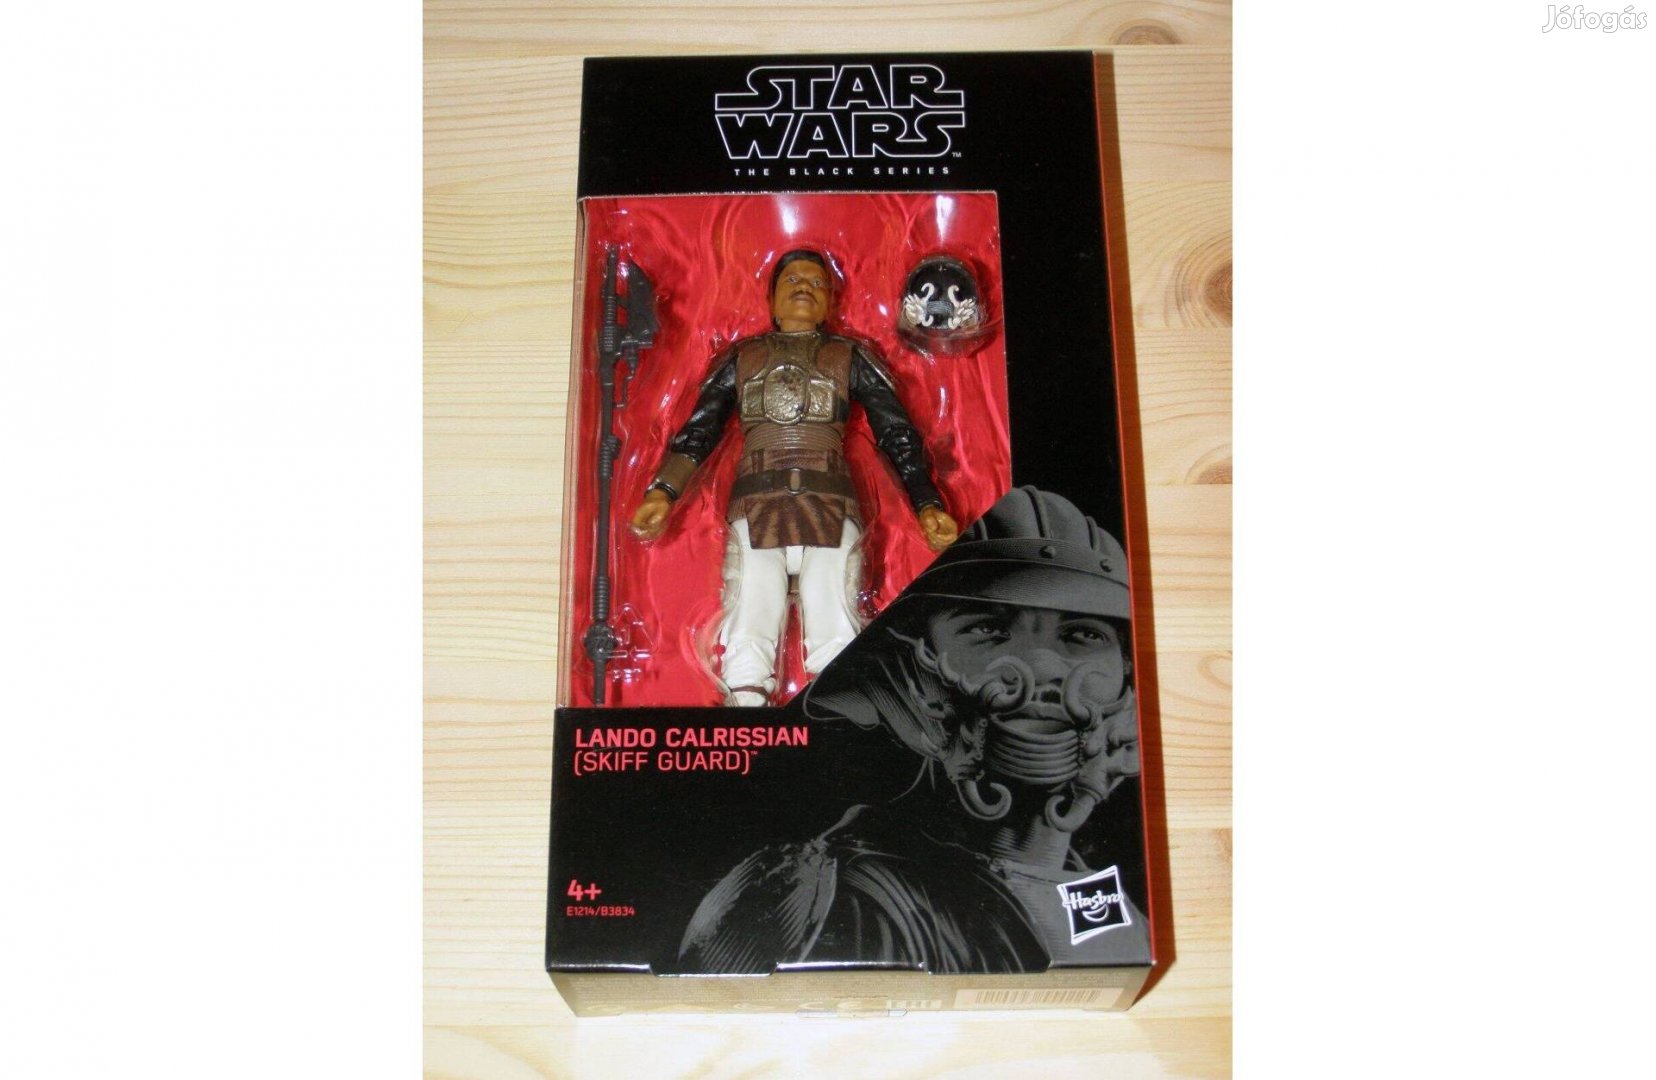 Star Wars Black Series 15 cm (6") Skiff Guard Lando Calrissian figura